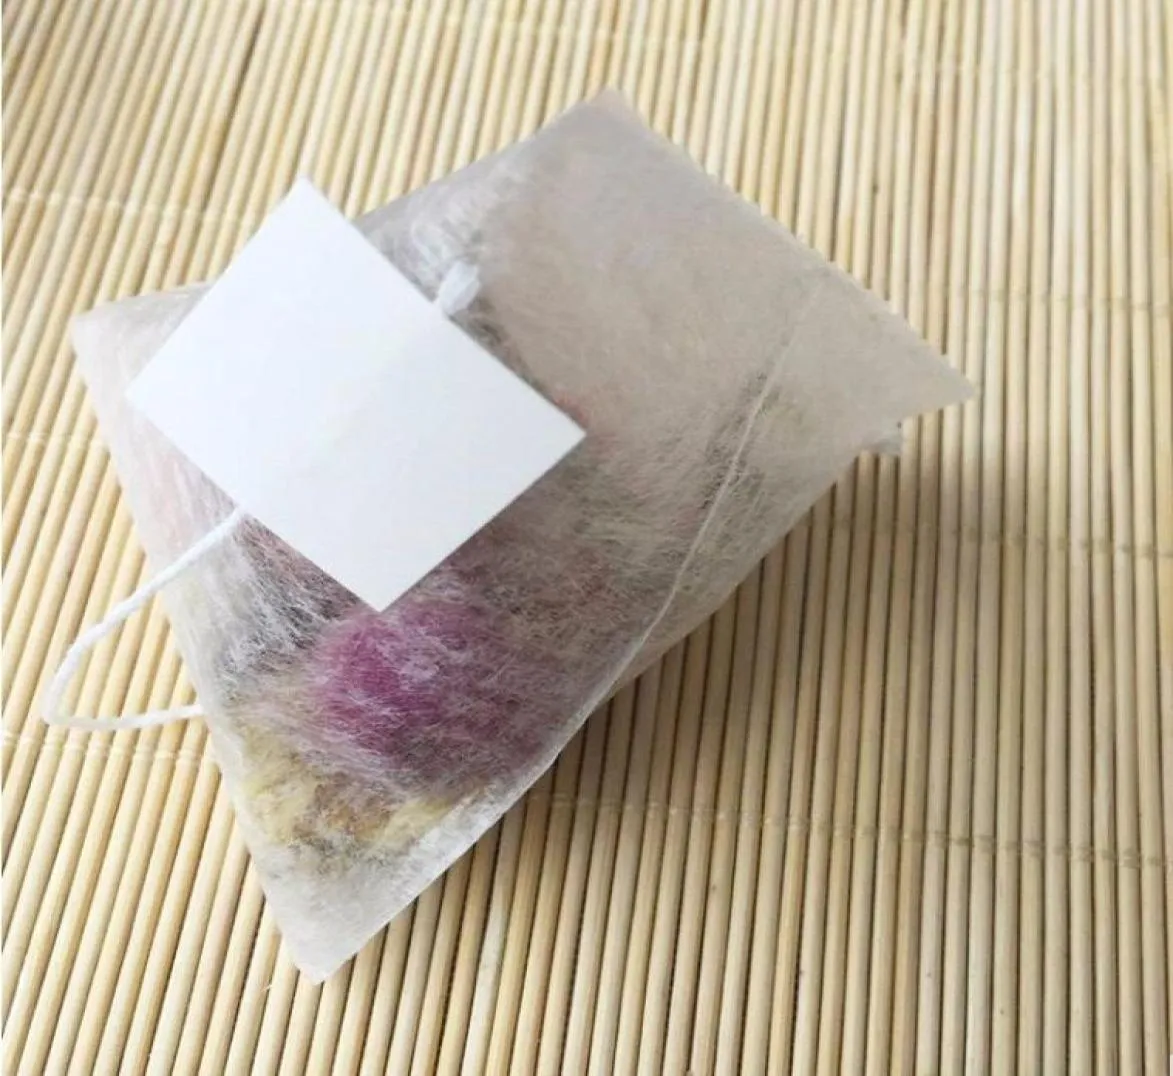 1000pcslot PLA Biodegraded Tea Filters Corn Fiber bags Quadrangle Pyramid Shape Heat Sealing Filter Bags foodgrade 5570mm6518810